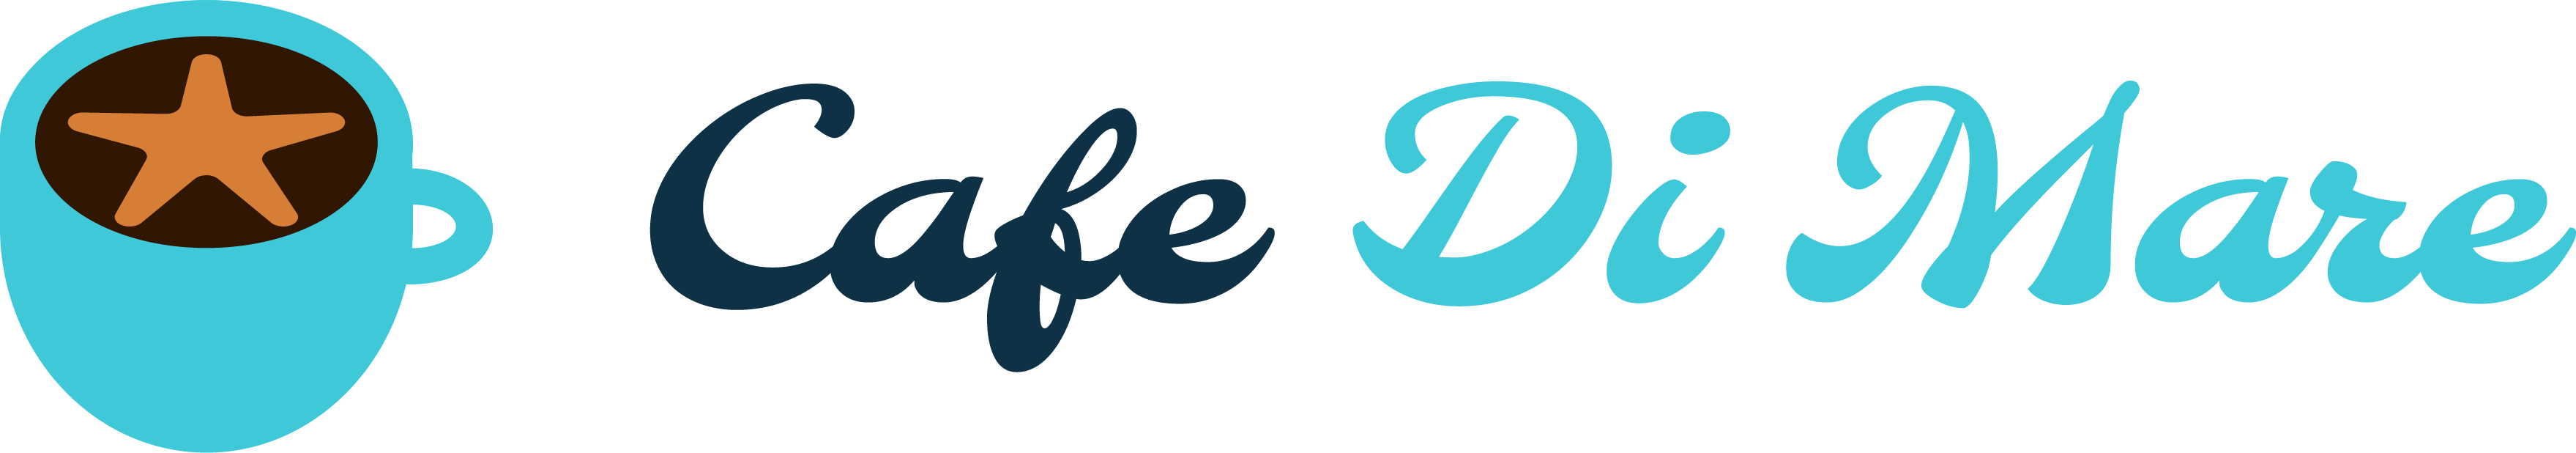 cafe di mare logo by RD Web Design